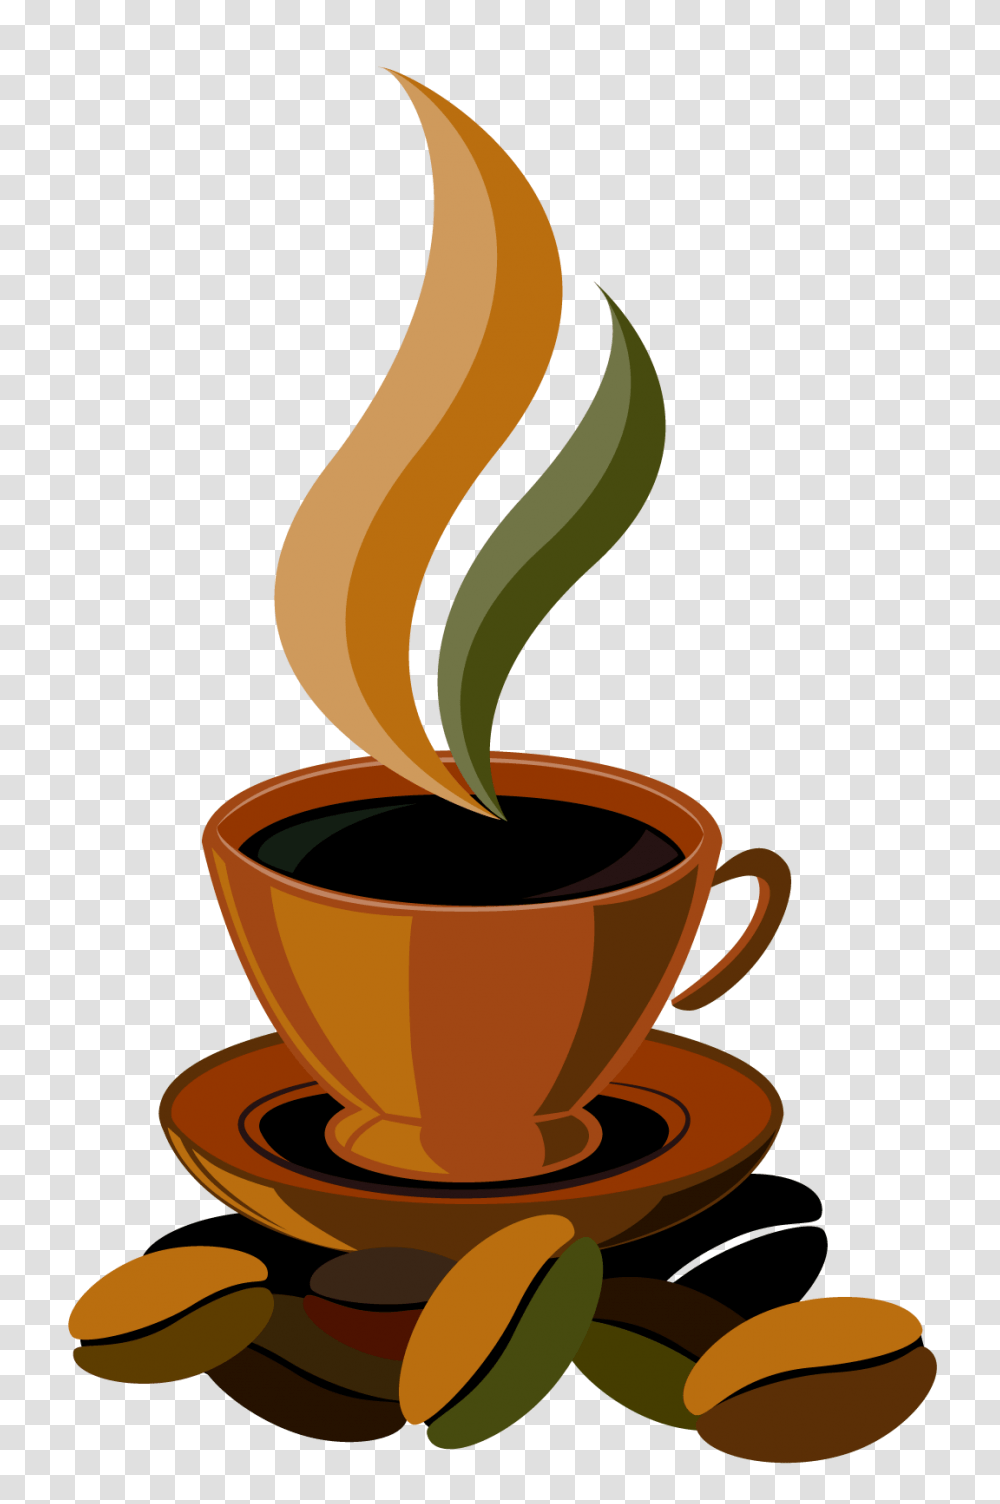 Starbucks Coffee Cup Clip Art, Saucer, Pottery, Espresso, Beverage Transparent Png